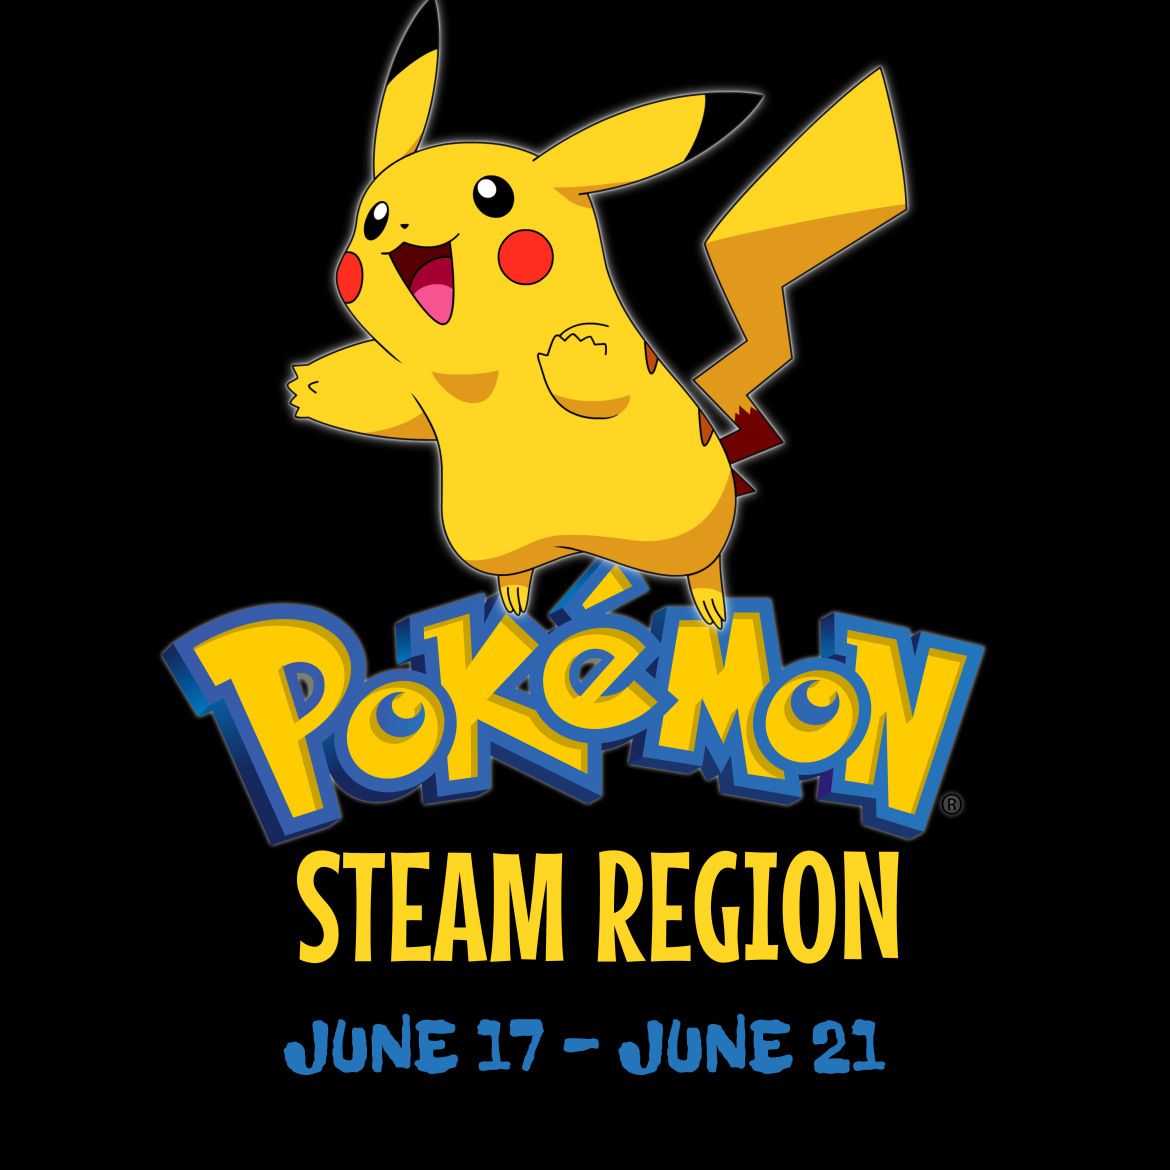 Code4Bots Pokemon STEAM Region Full-Day Summer Camp